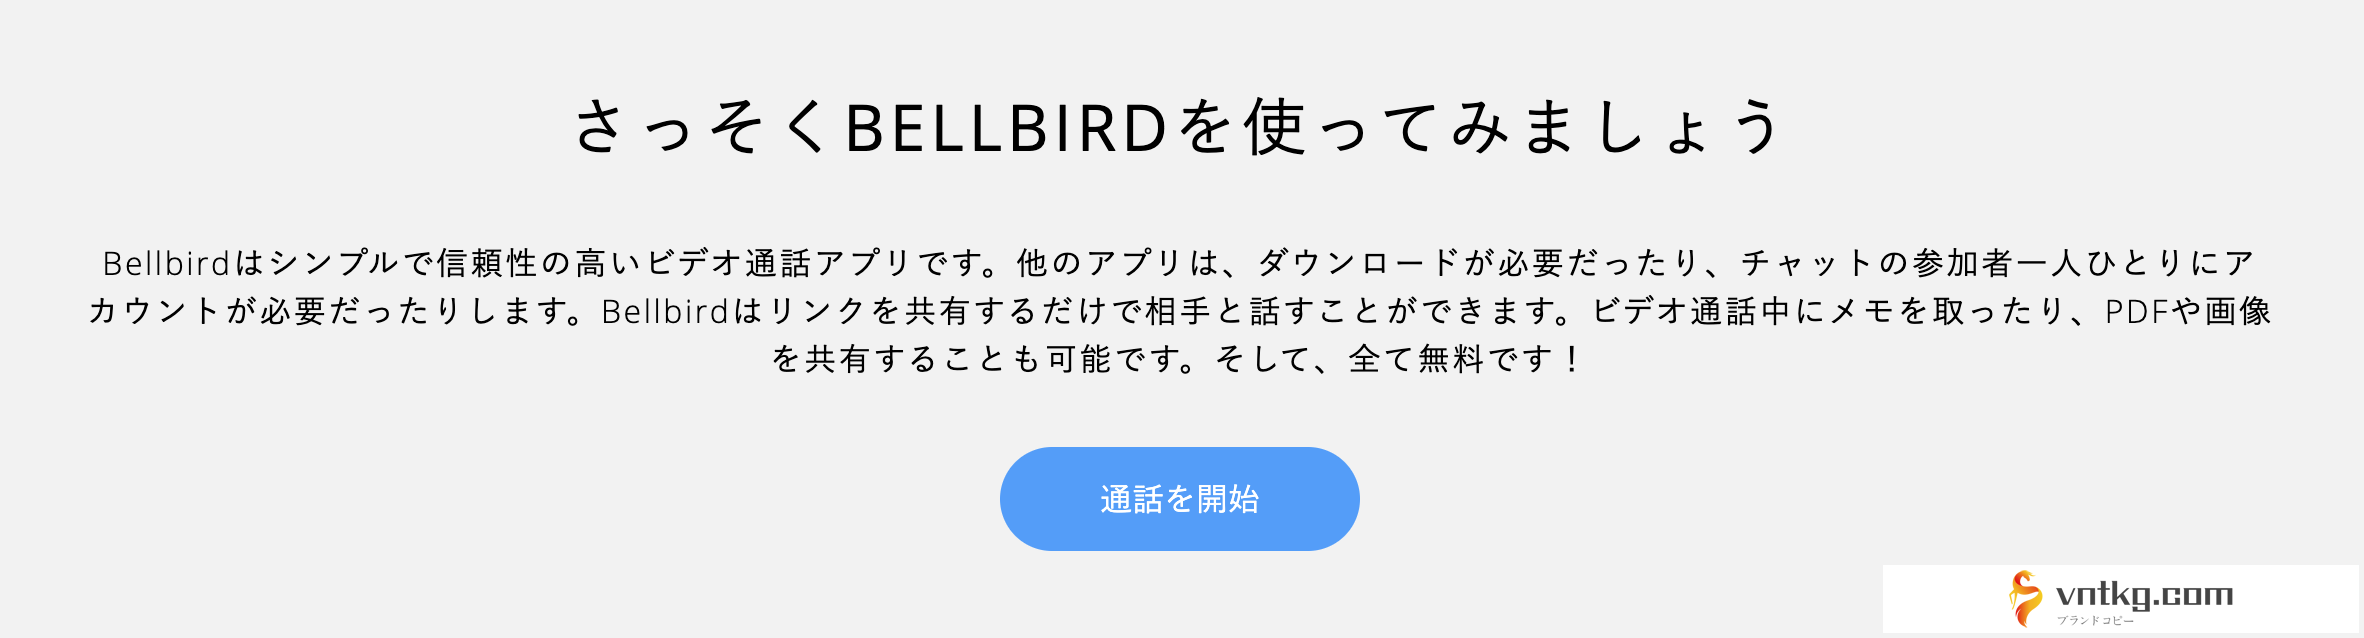 Bellbirdのポイント